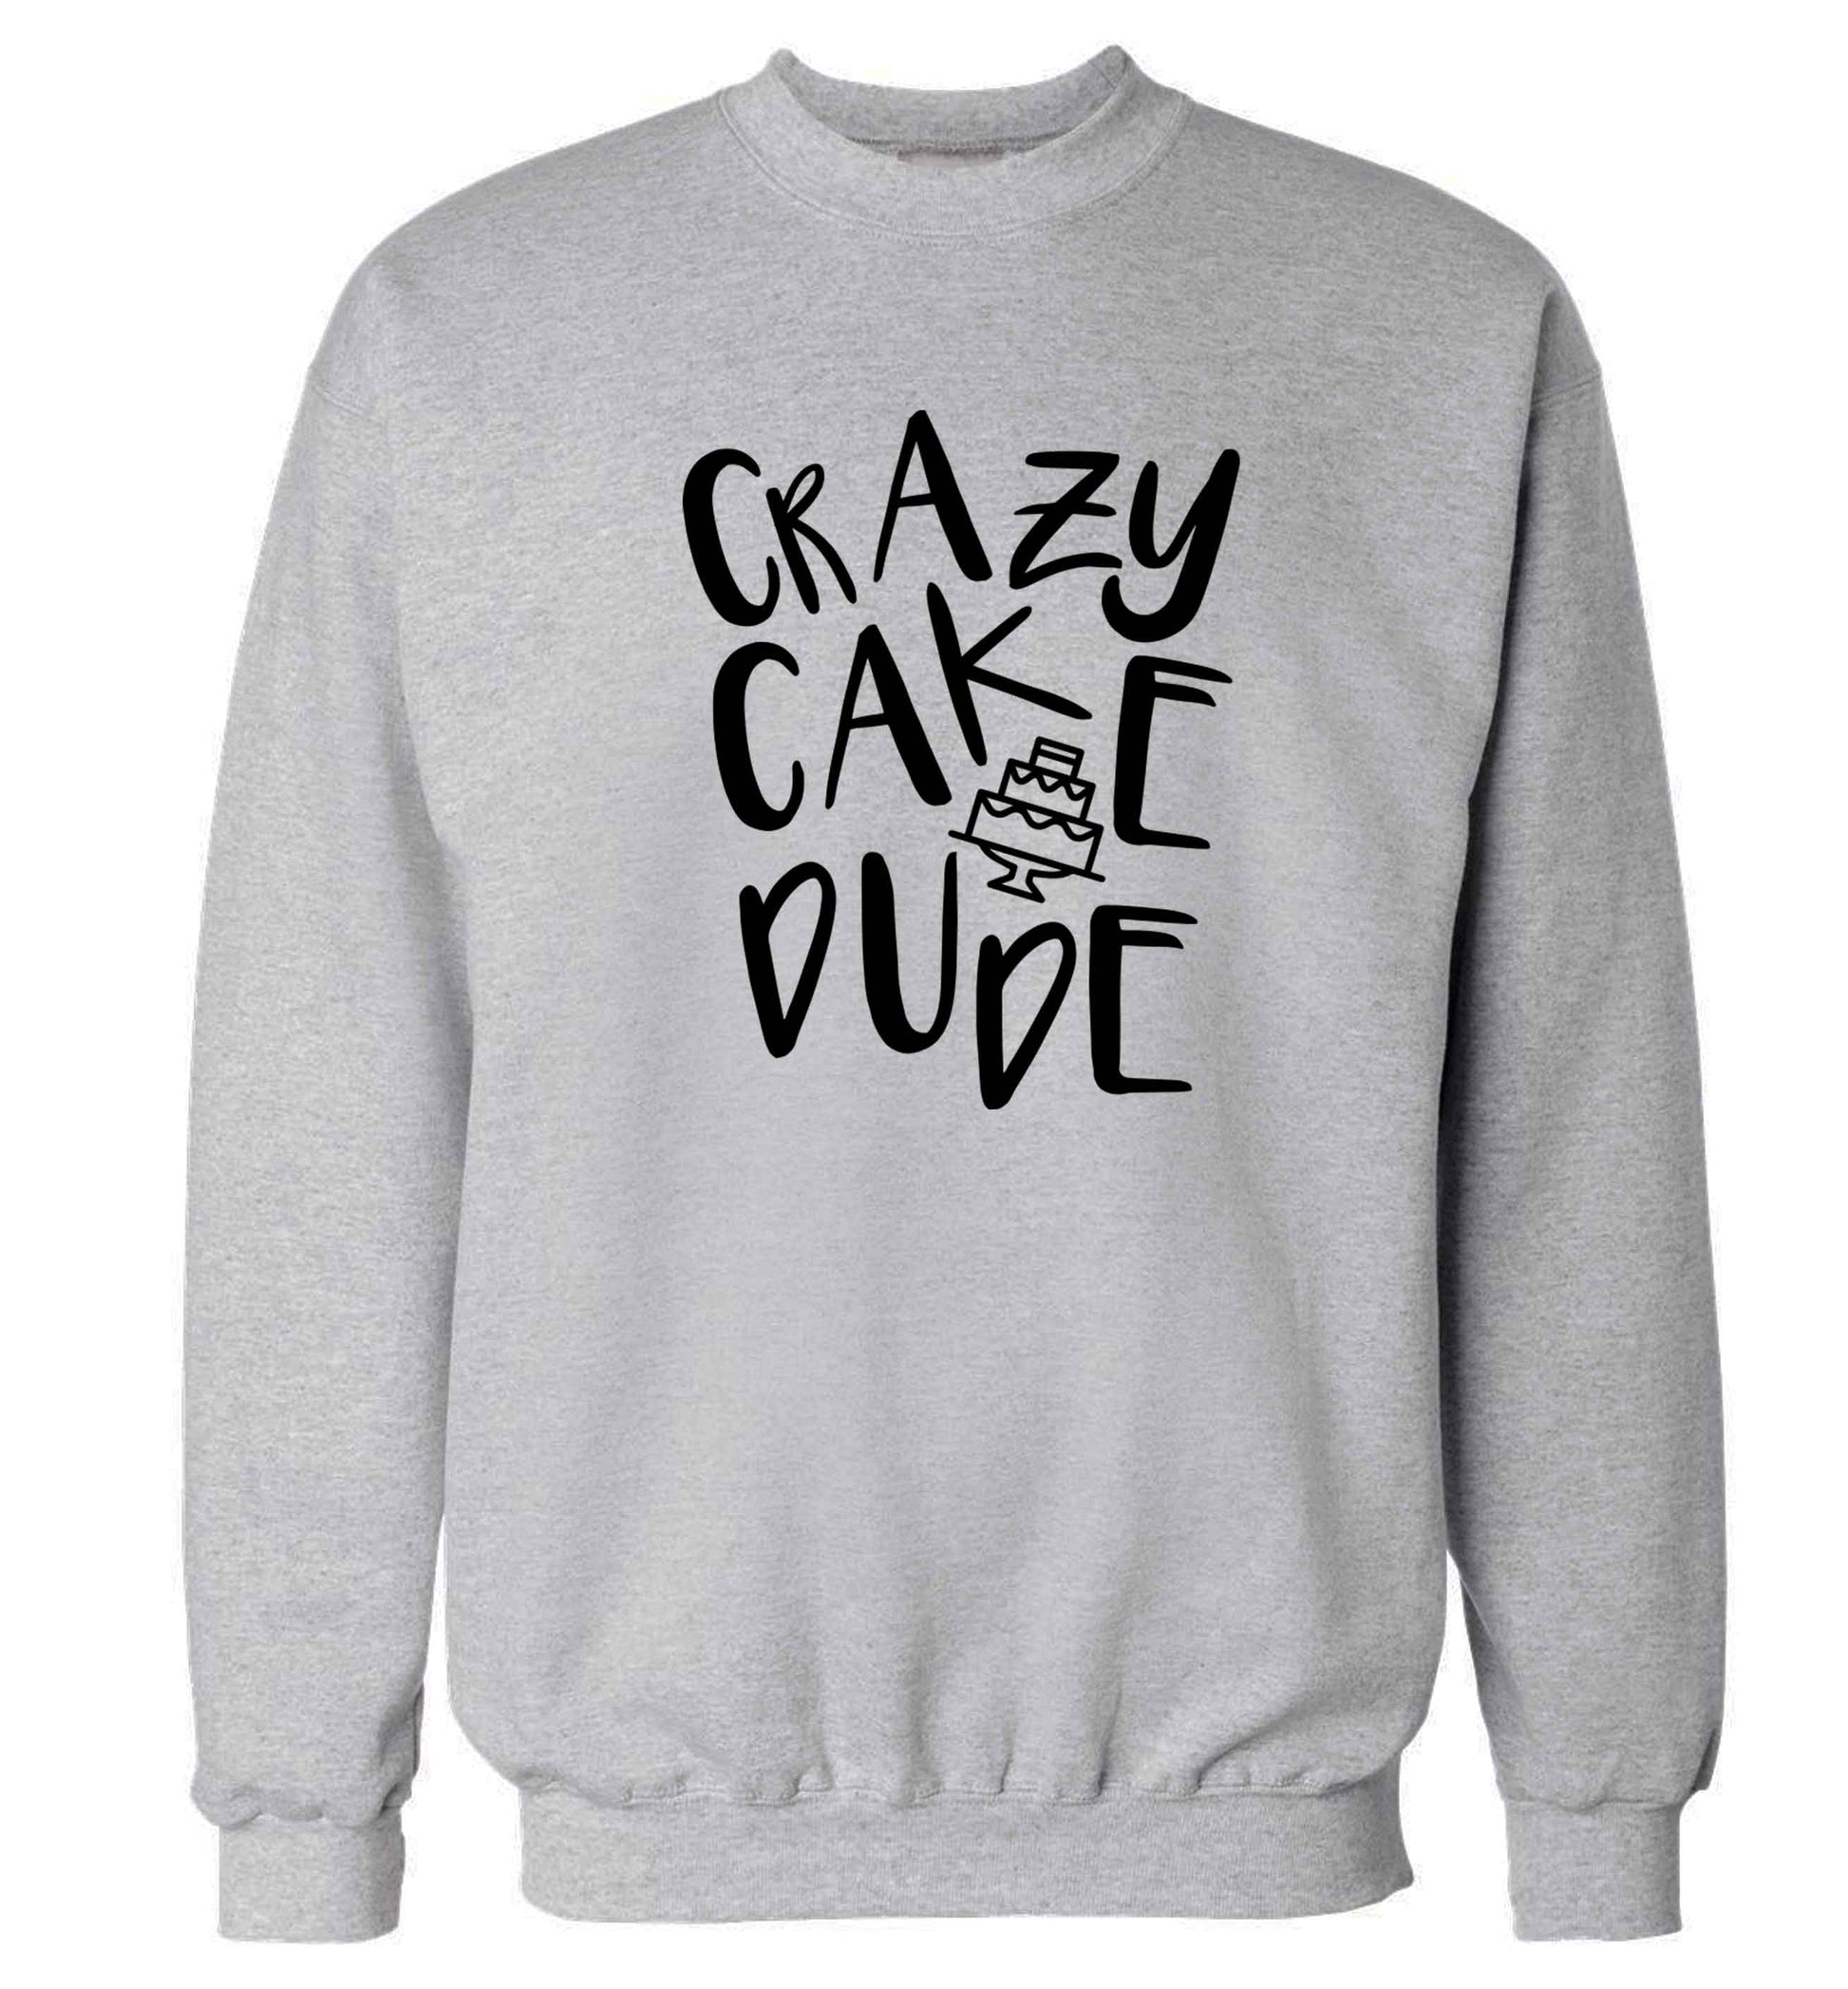 Crazy cake dude Adult's unisex grey Sweater 2XL